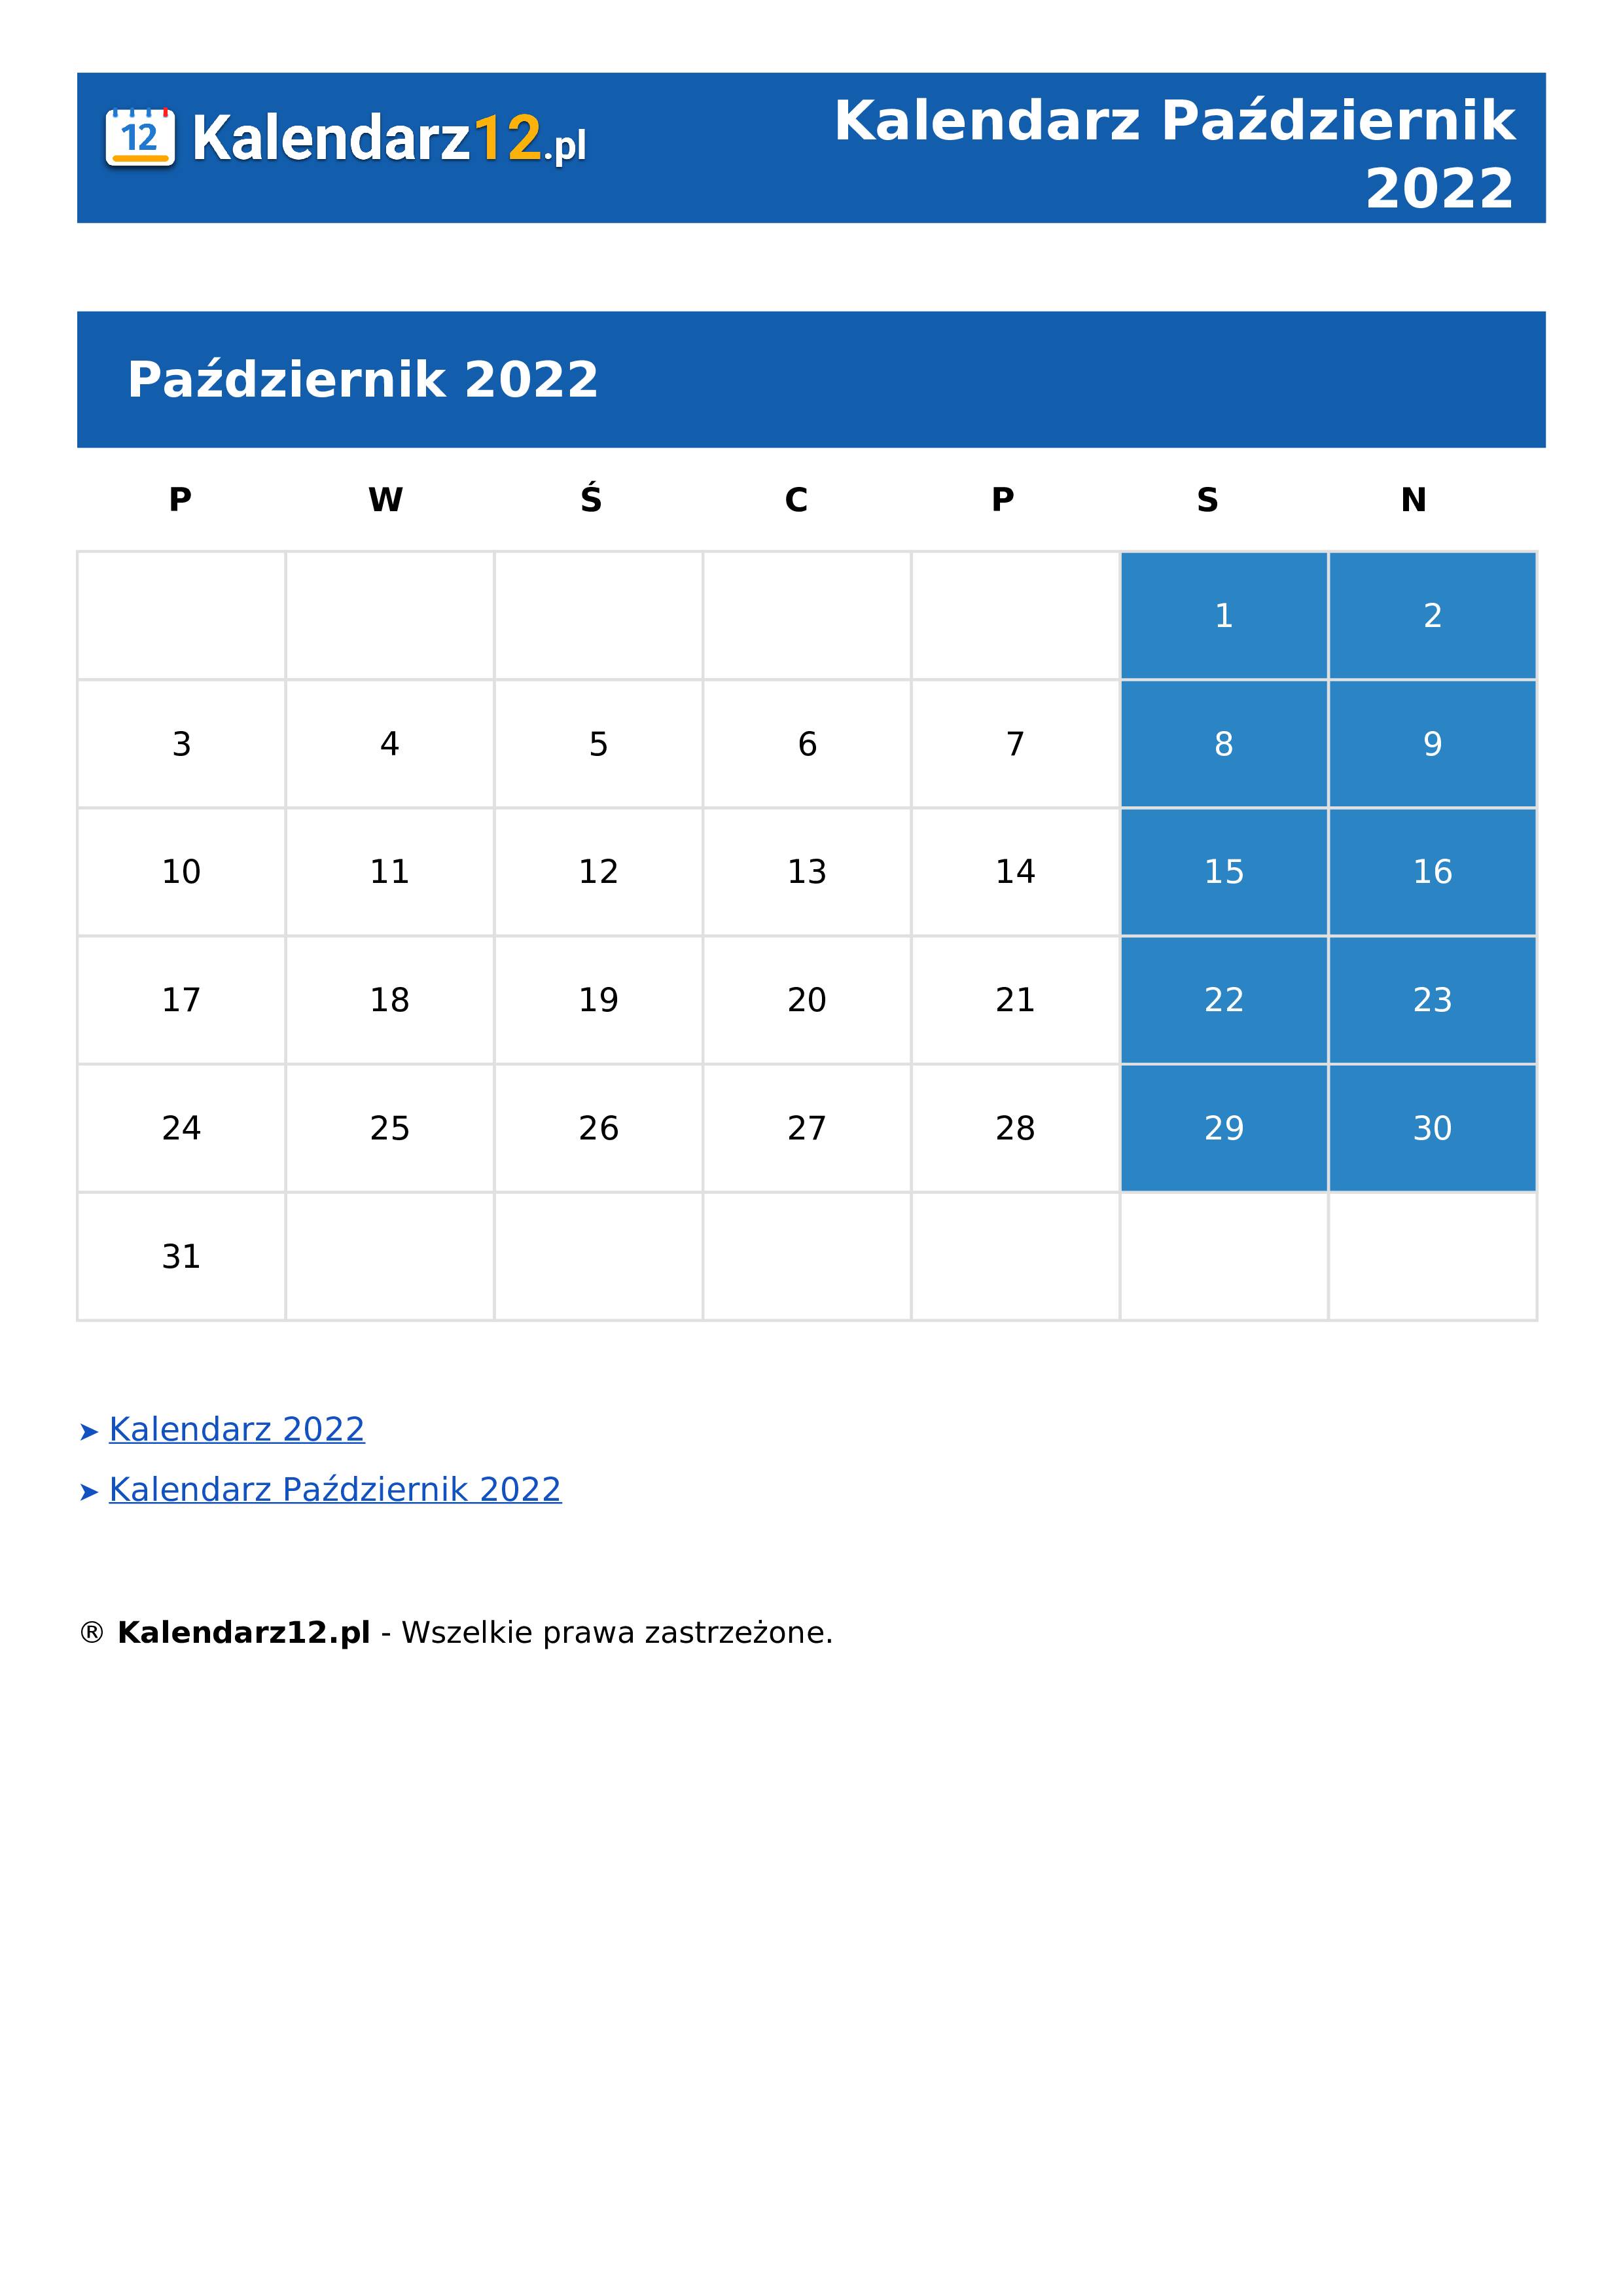 Calendar Październik 2022